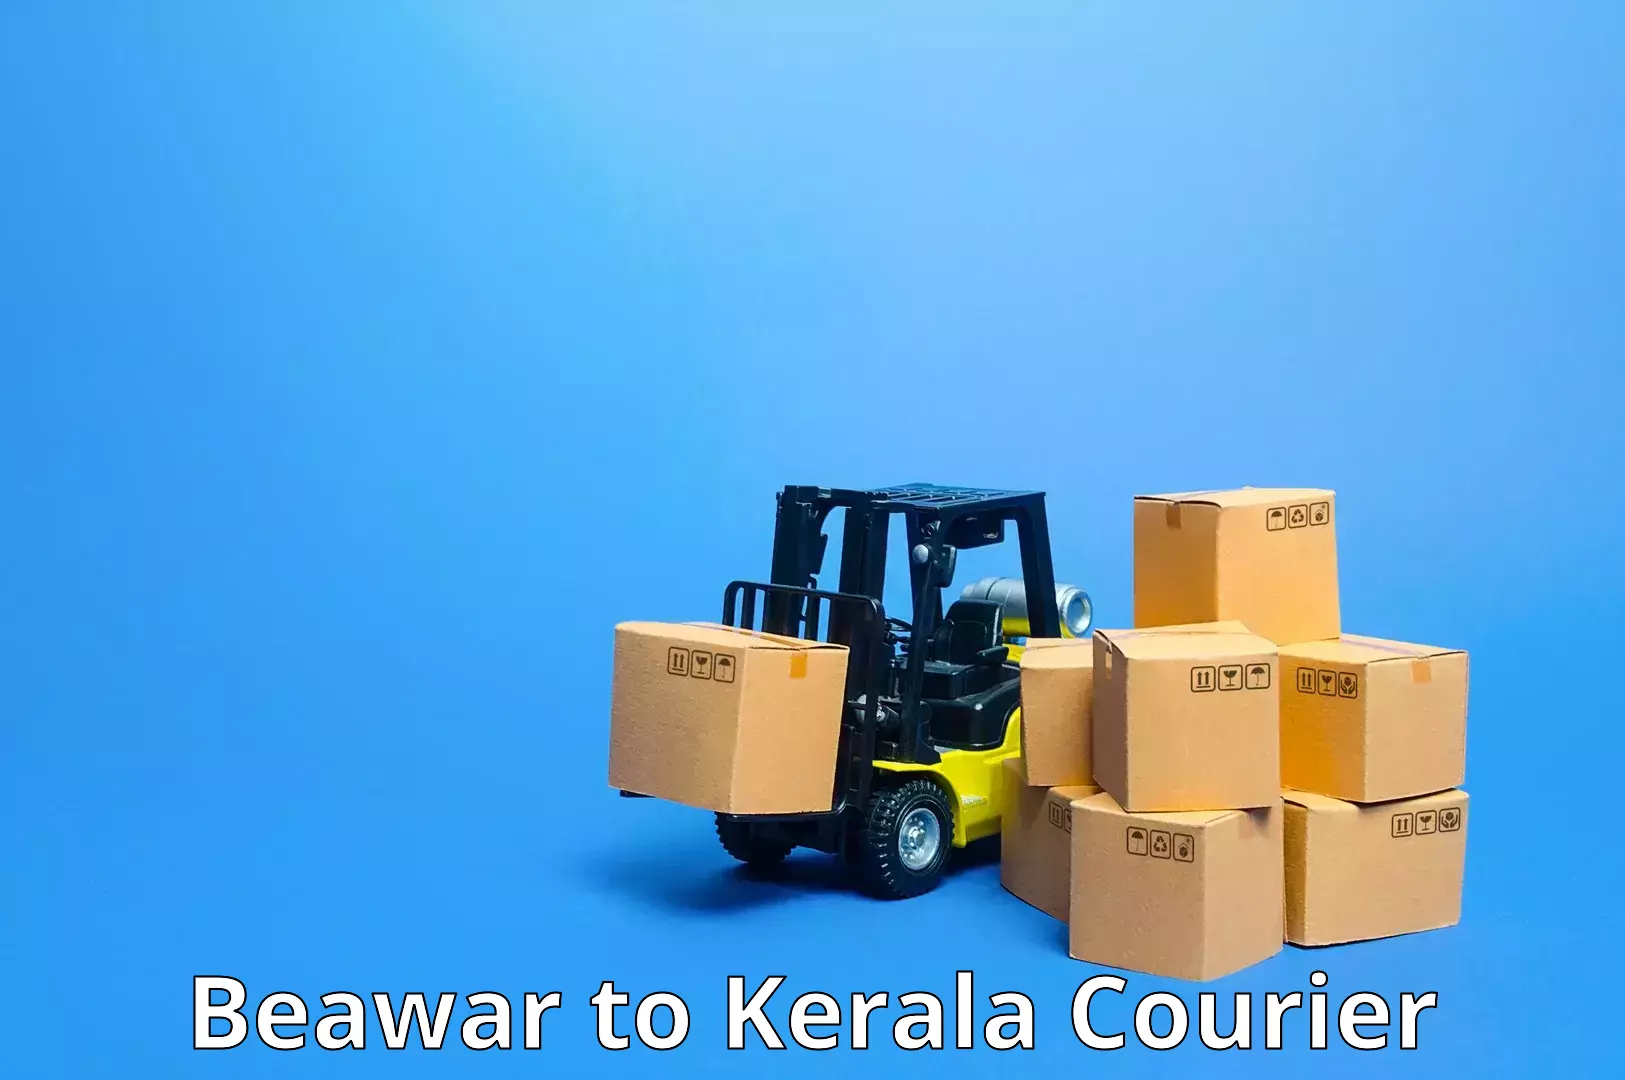 Enhanced tracking features in Beawar to Kerala